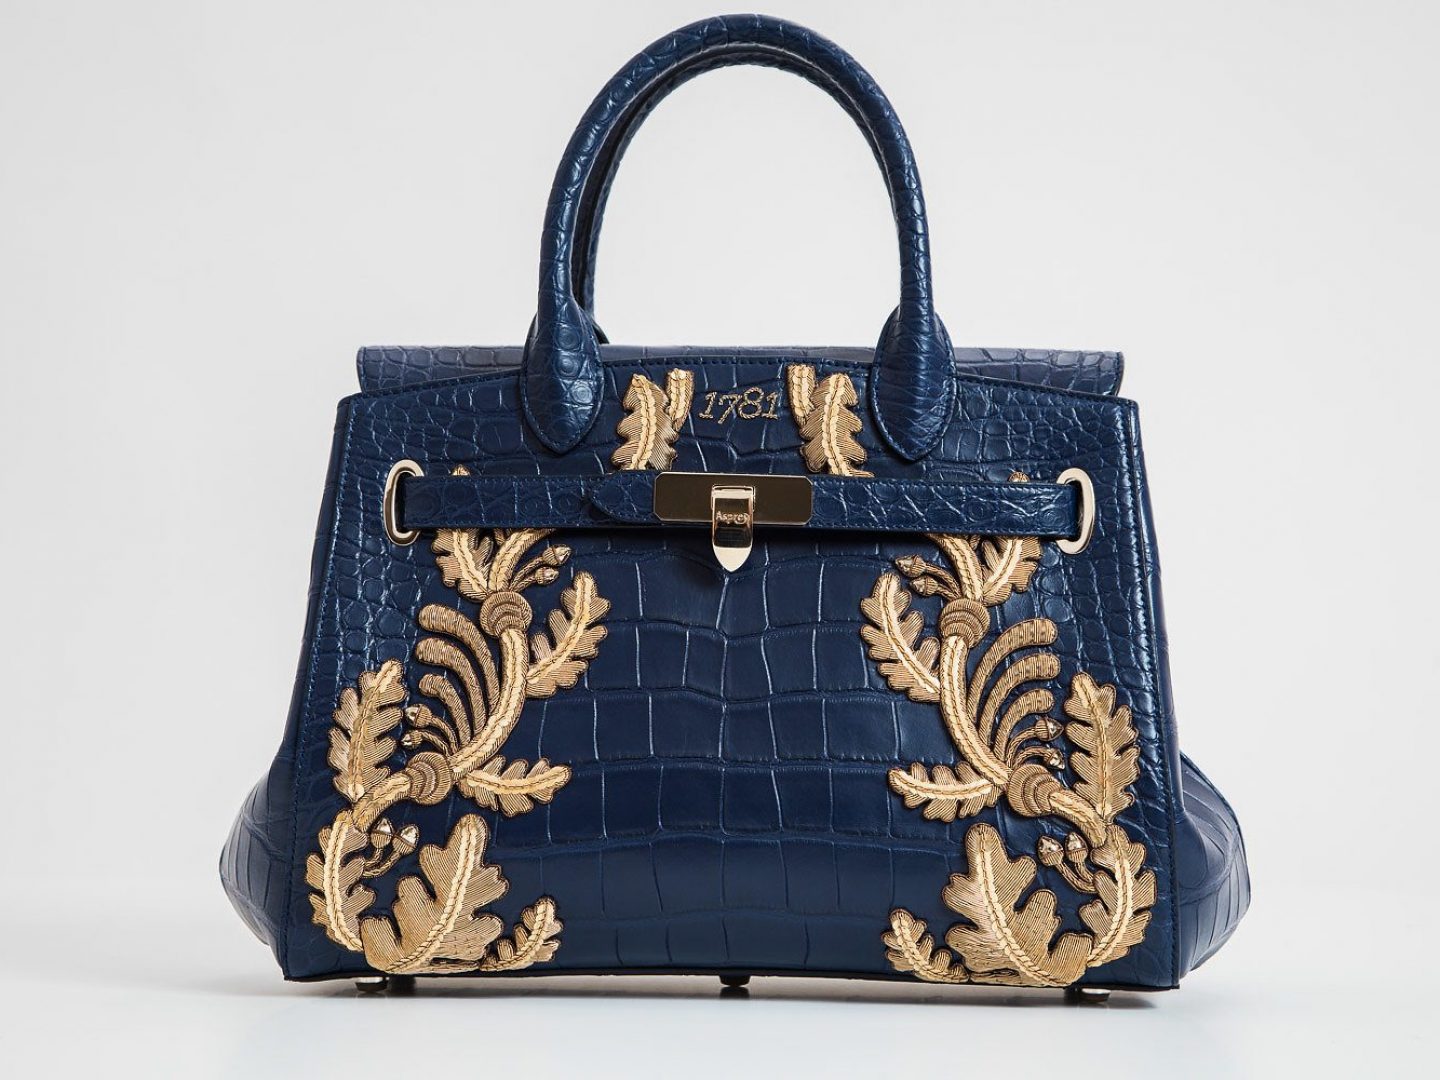 The Embellished Handbag: A Celebration of 250 Years